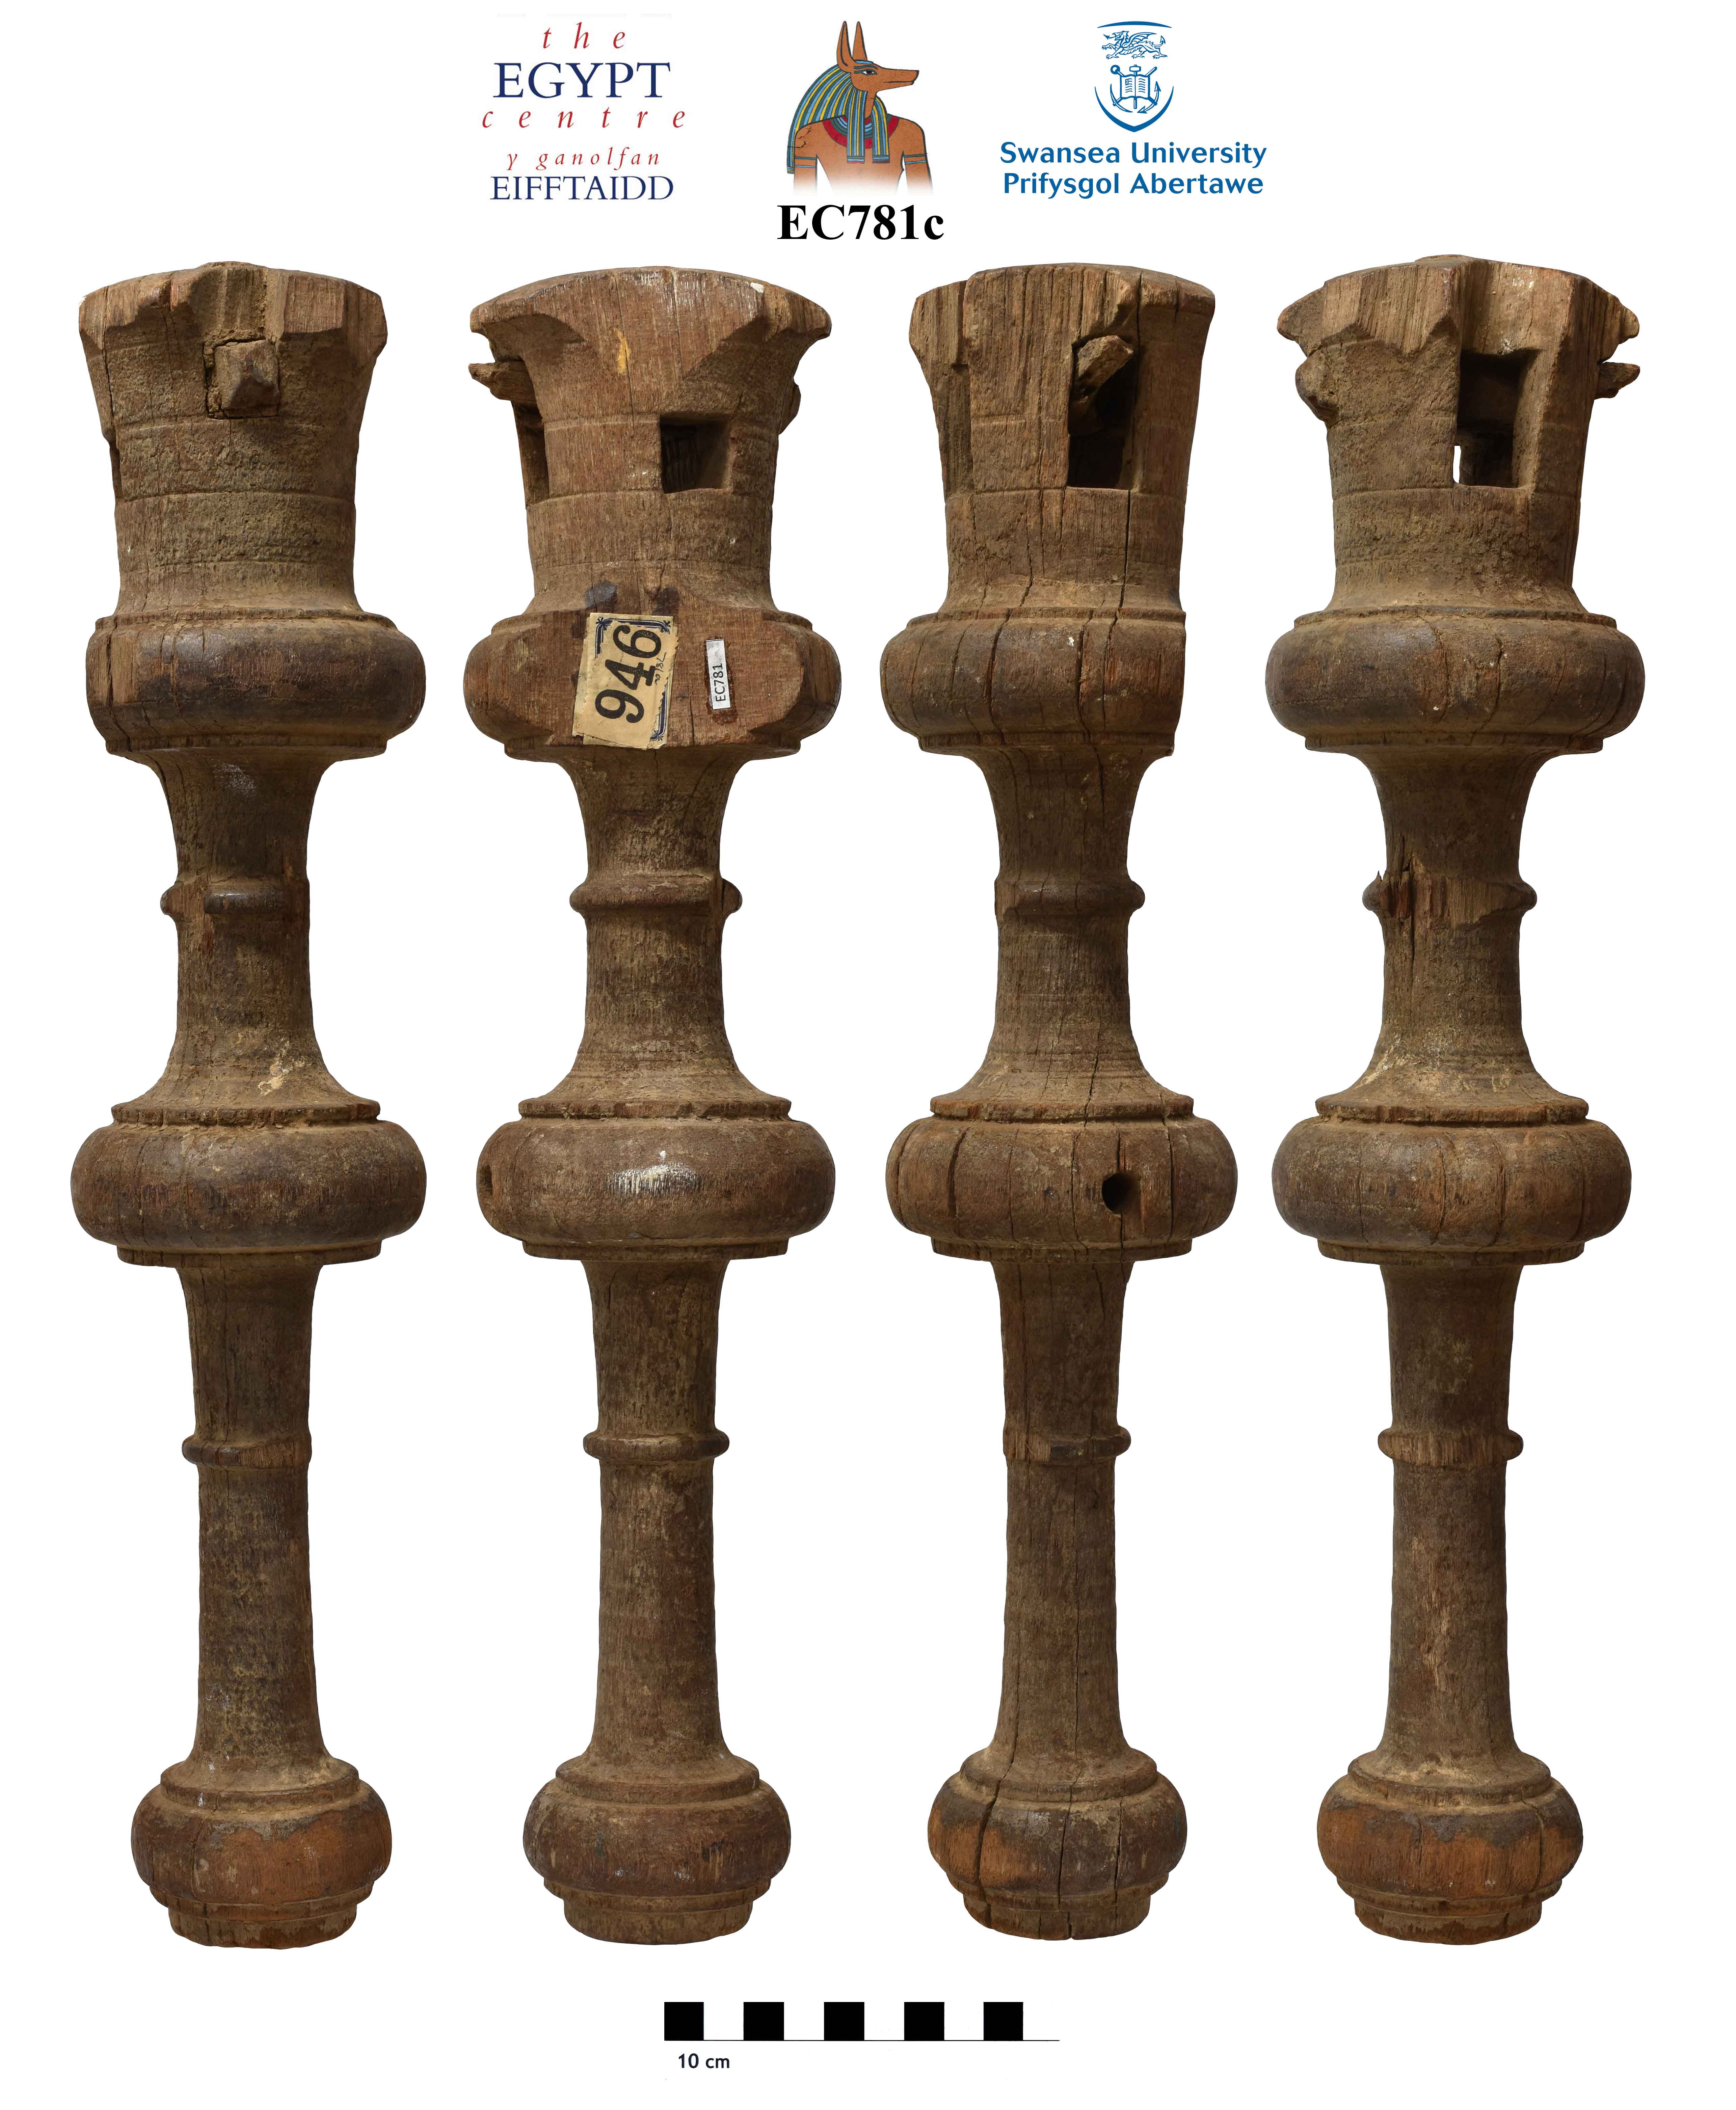 Image for: Wooden furniture leg